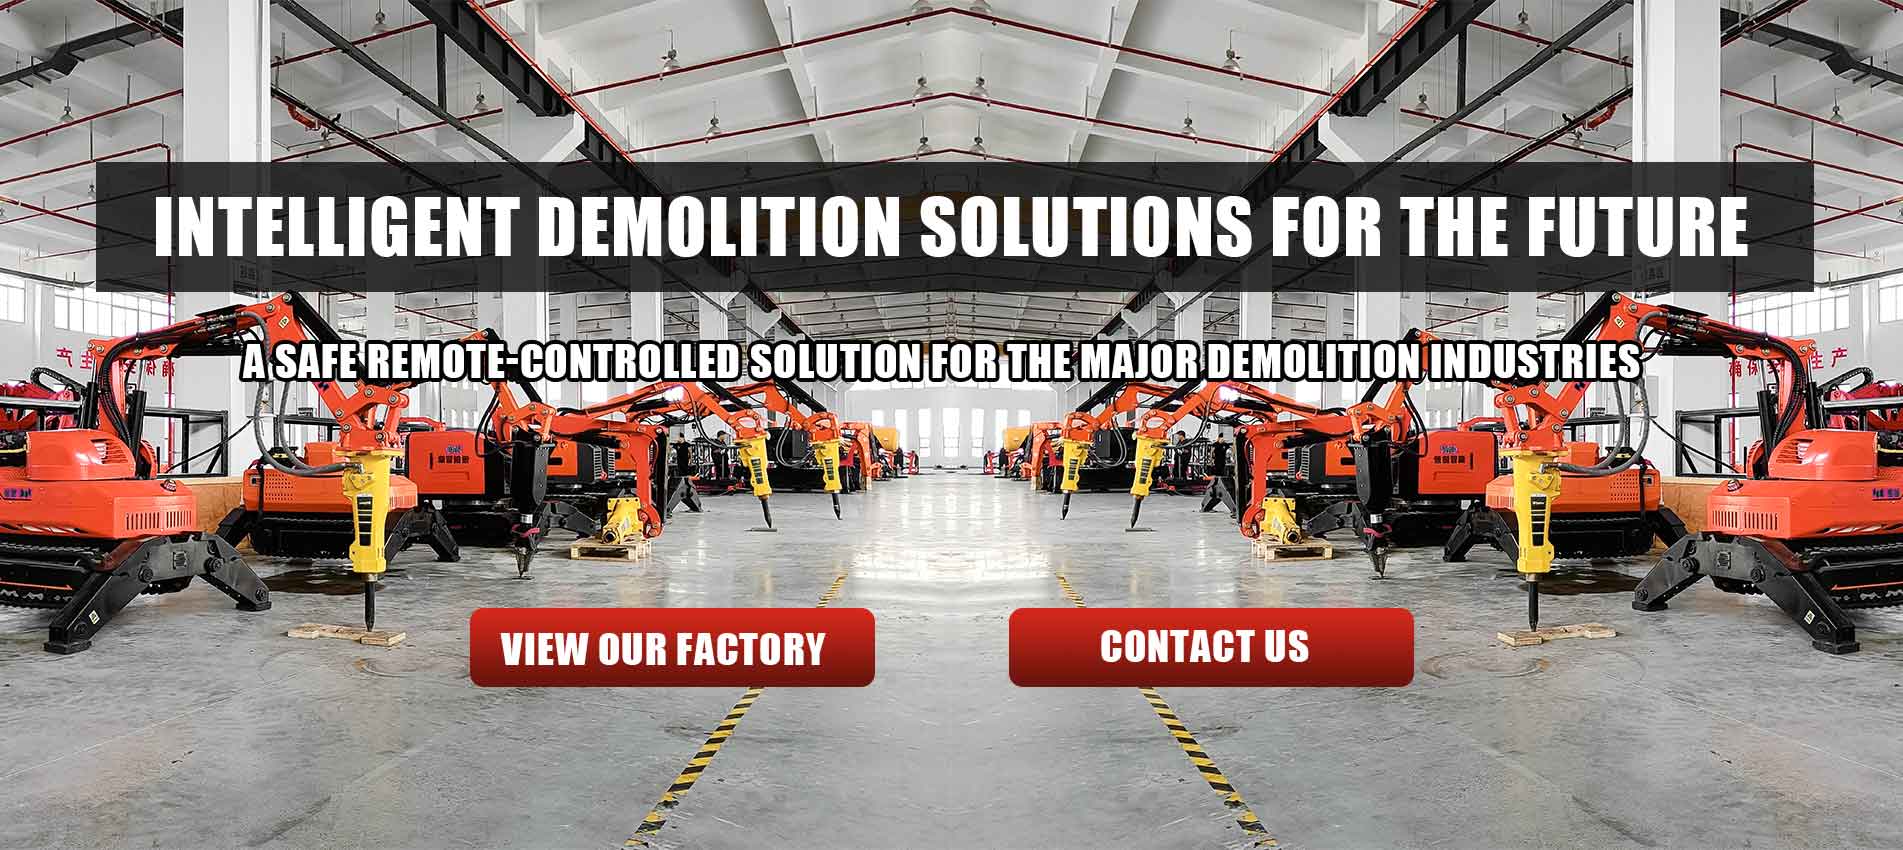 Demolition Robot and Equipment Factory